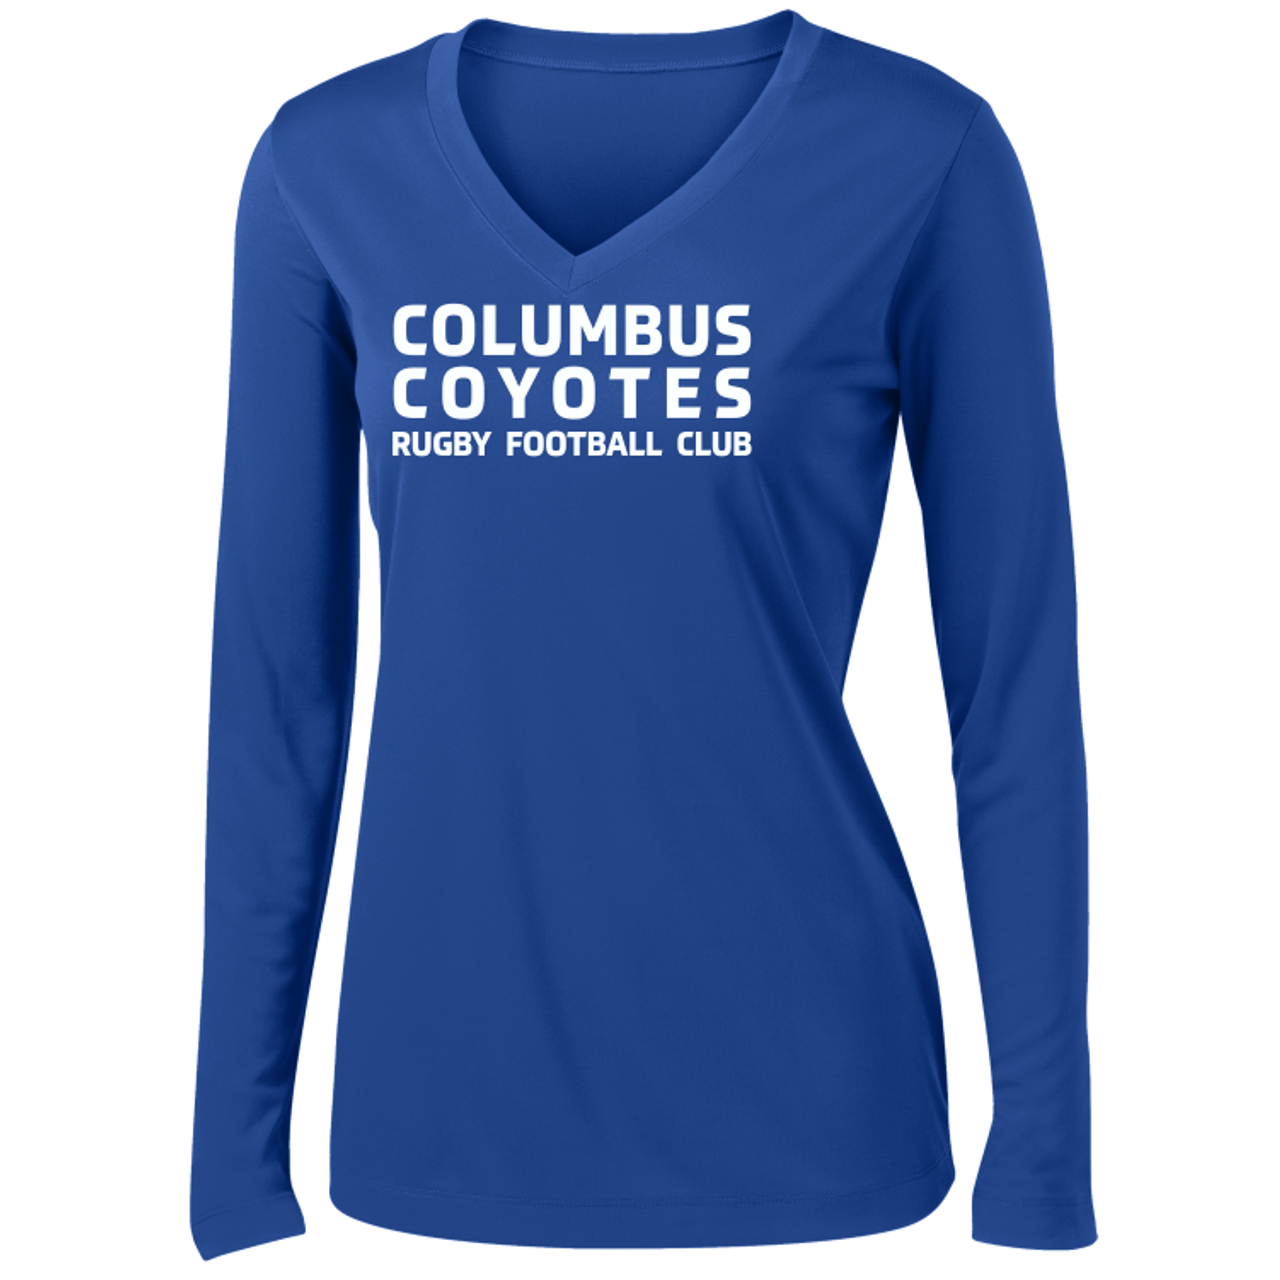 Columbus Coyotes Performance Tee,  Royal